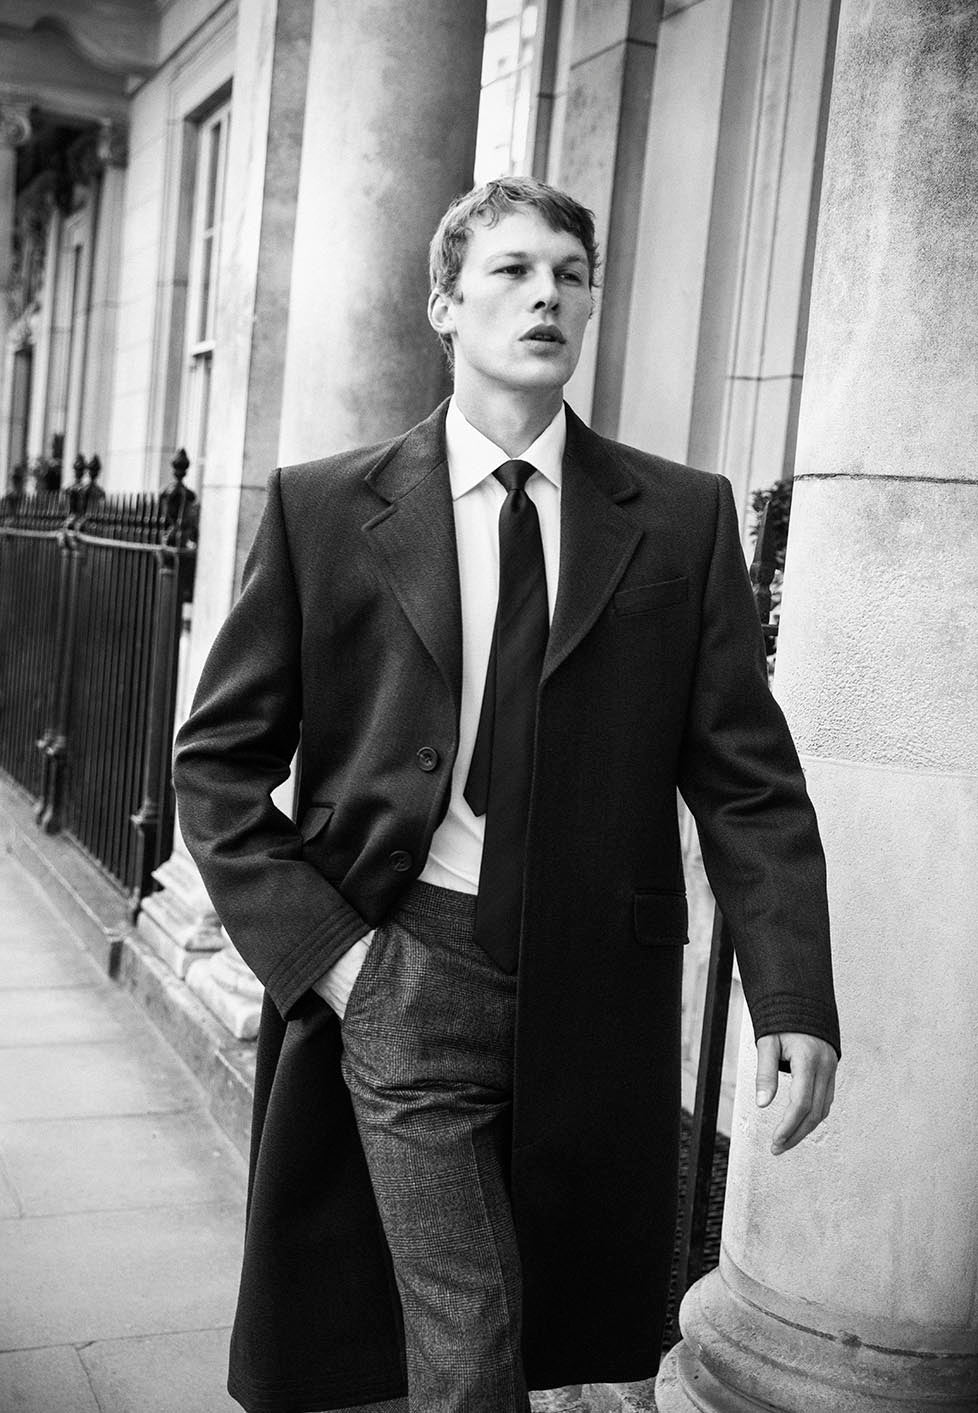 Gentlemen's Tailoring & Suiting | Oliver Brown, London